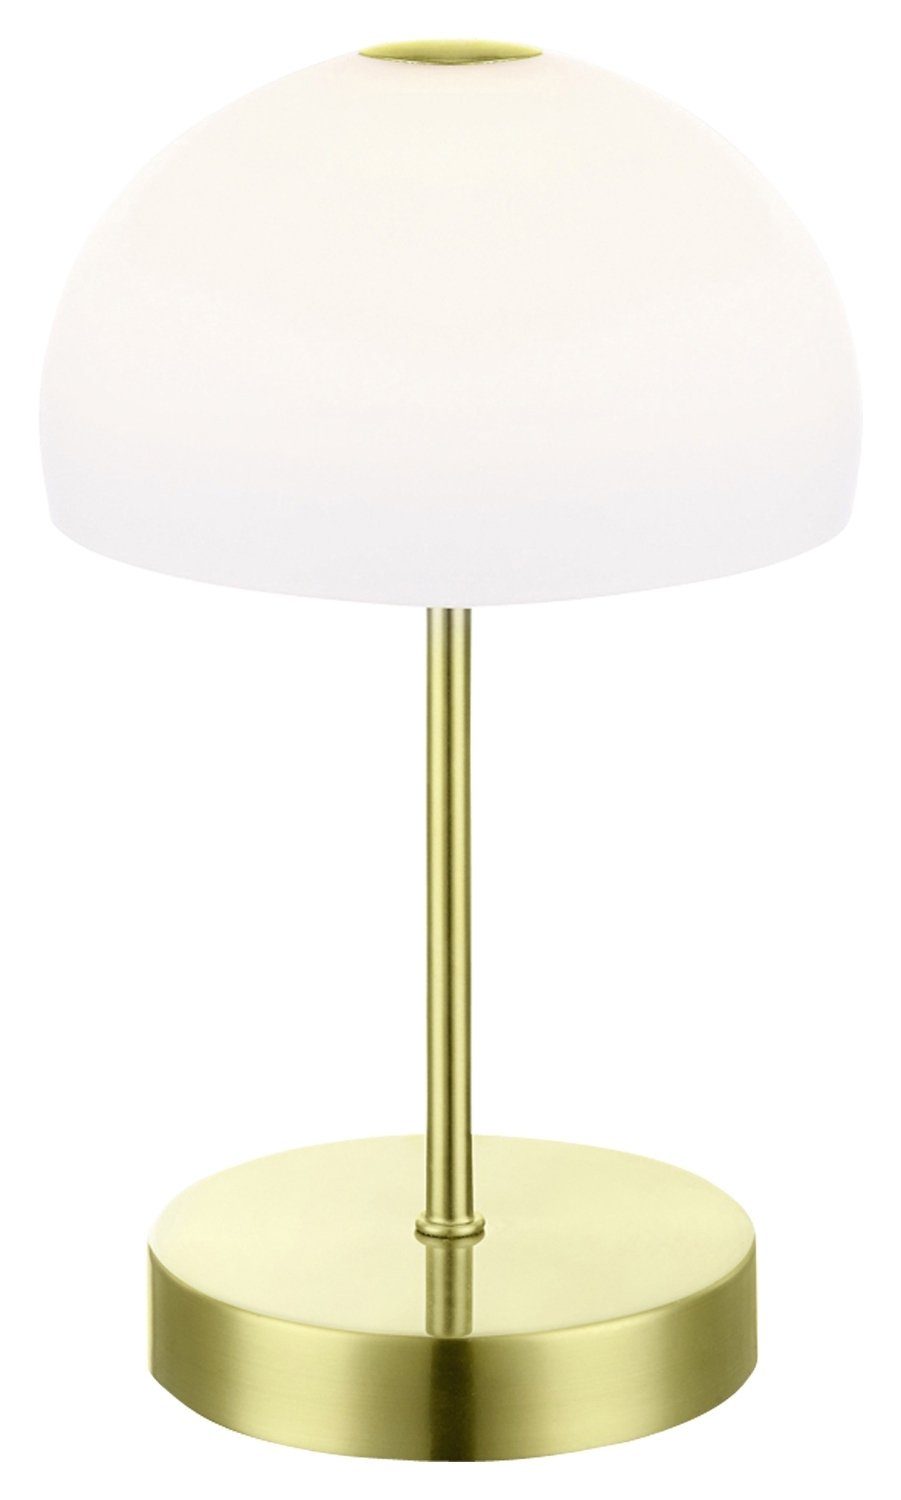 Globo LED Tischleuchte SNOWFLAKE, 1-flammig, H 27 cm, Messing, Opalglas, LED fest integriert, Warmweiß, Touchsensor